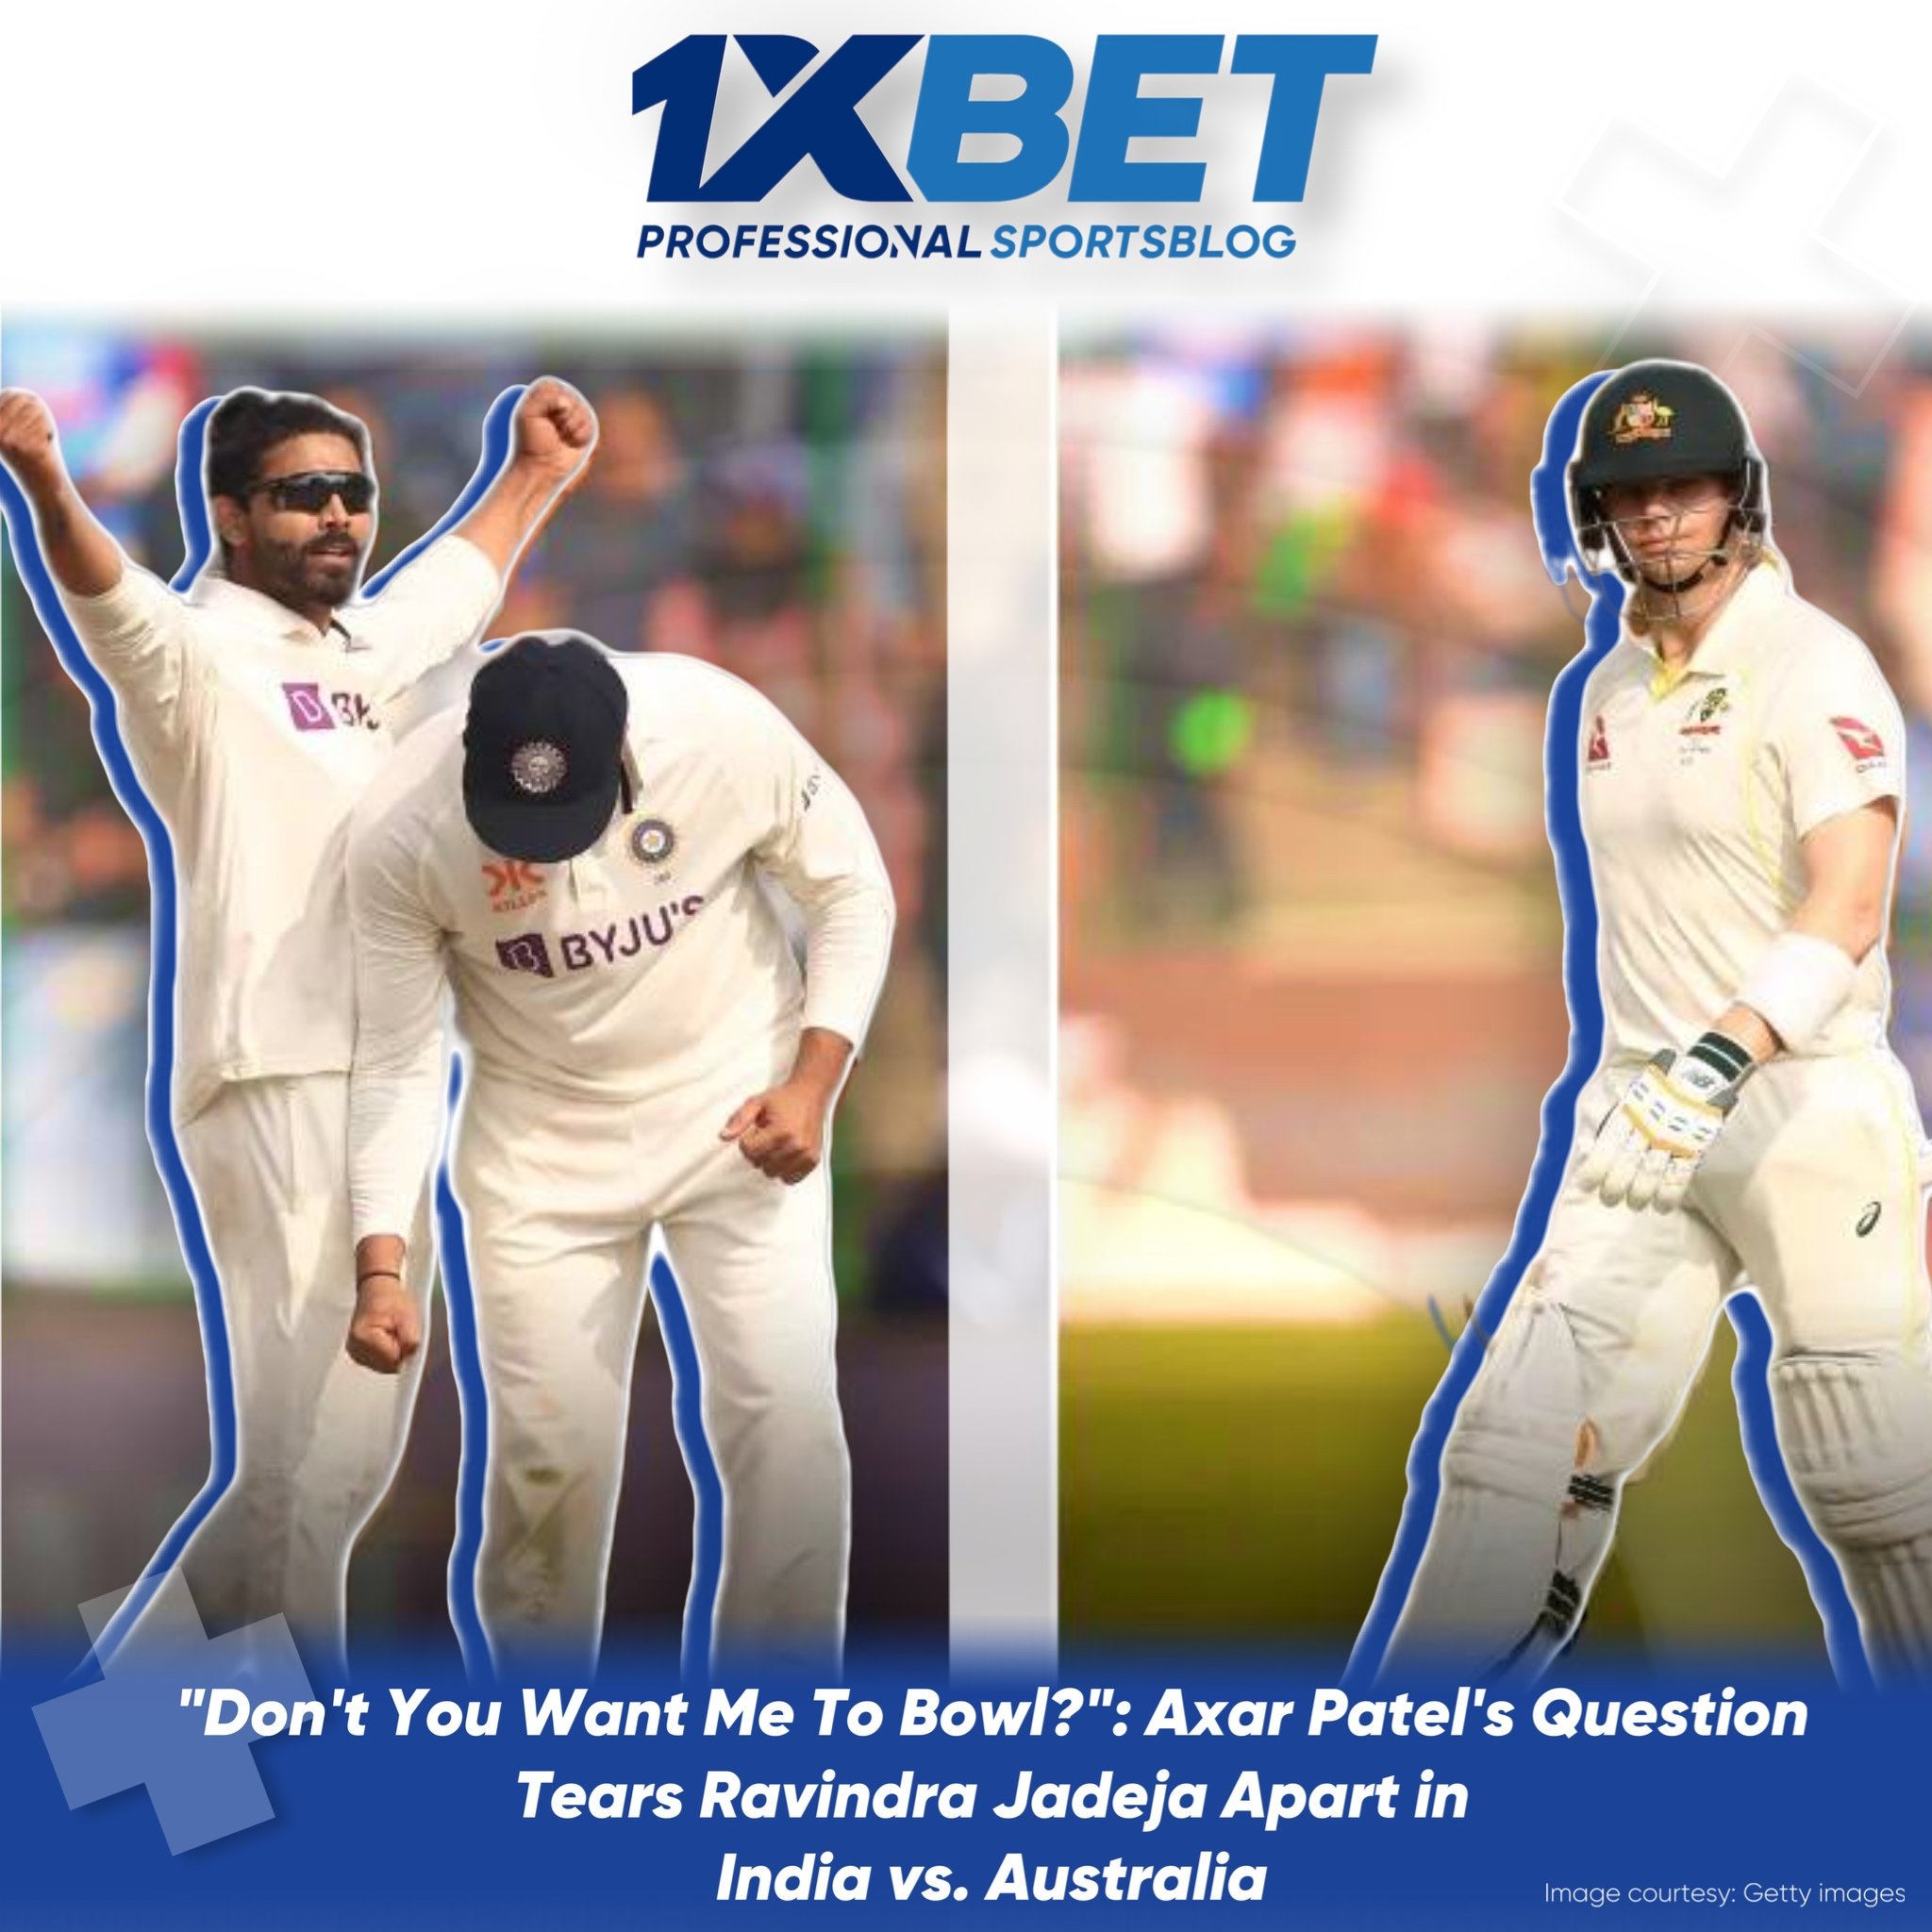 "Don't You Want Me To Bowl?": Axar Patel's Question Tears Ravindra Jadeja Apart in India vs. Australia